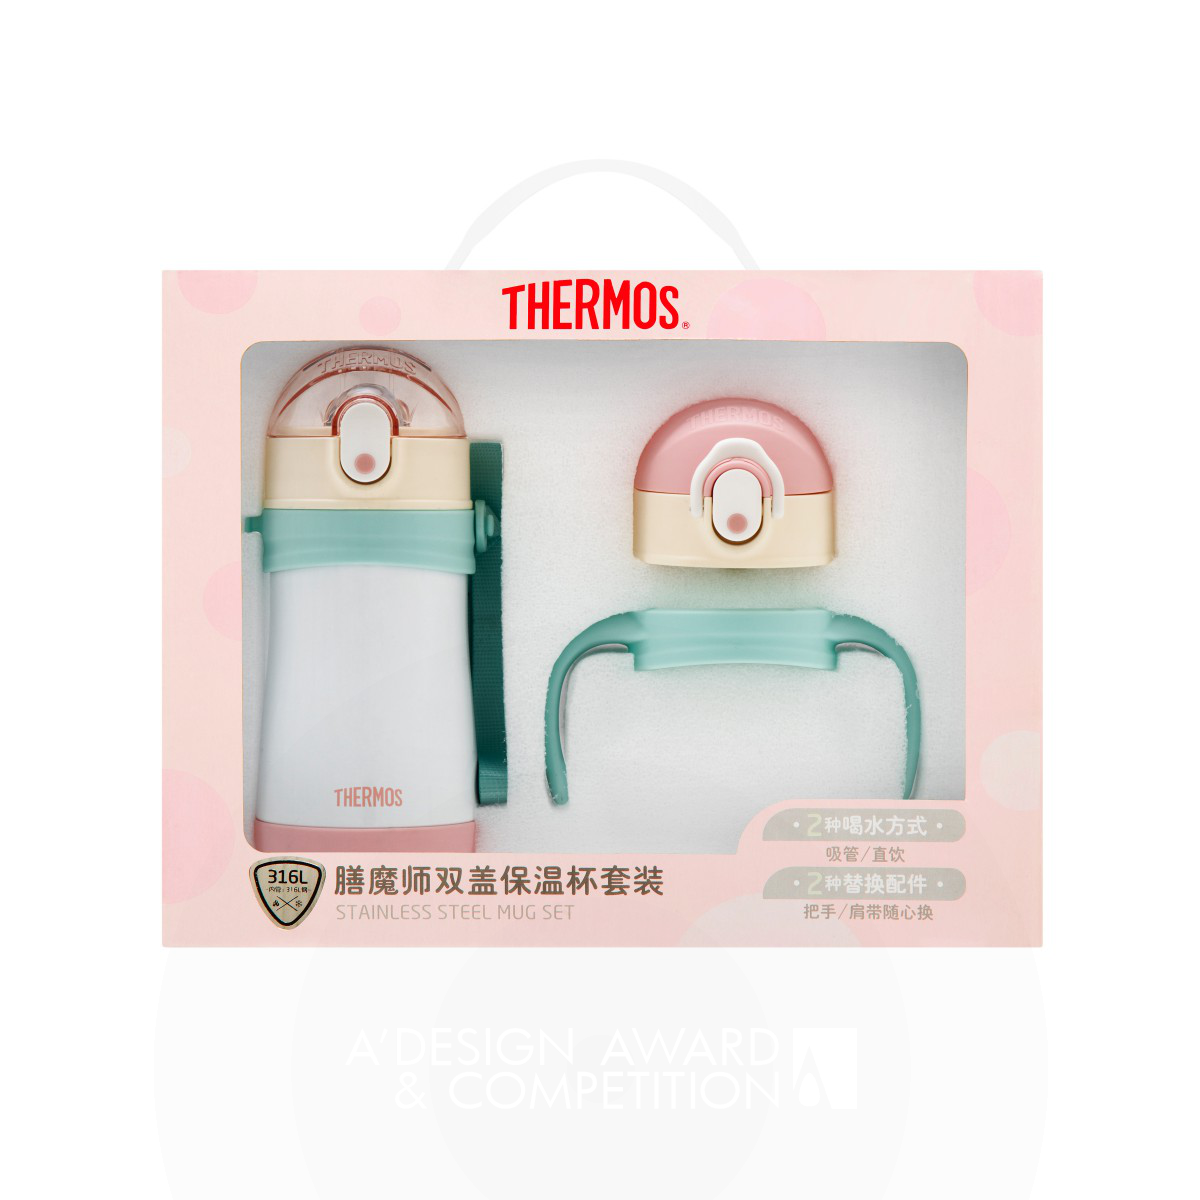 Thermos (China) Housewares Co., Ltd. Dual Cap Design